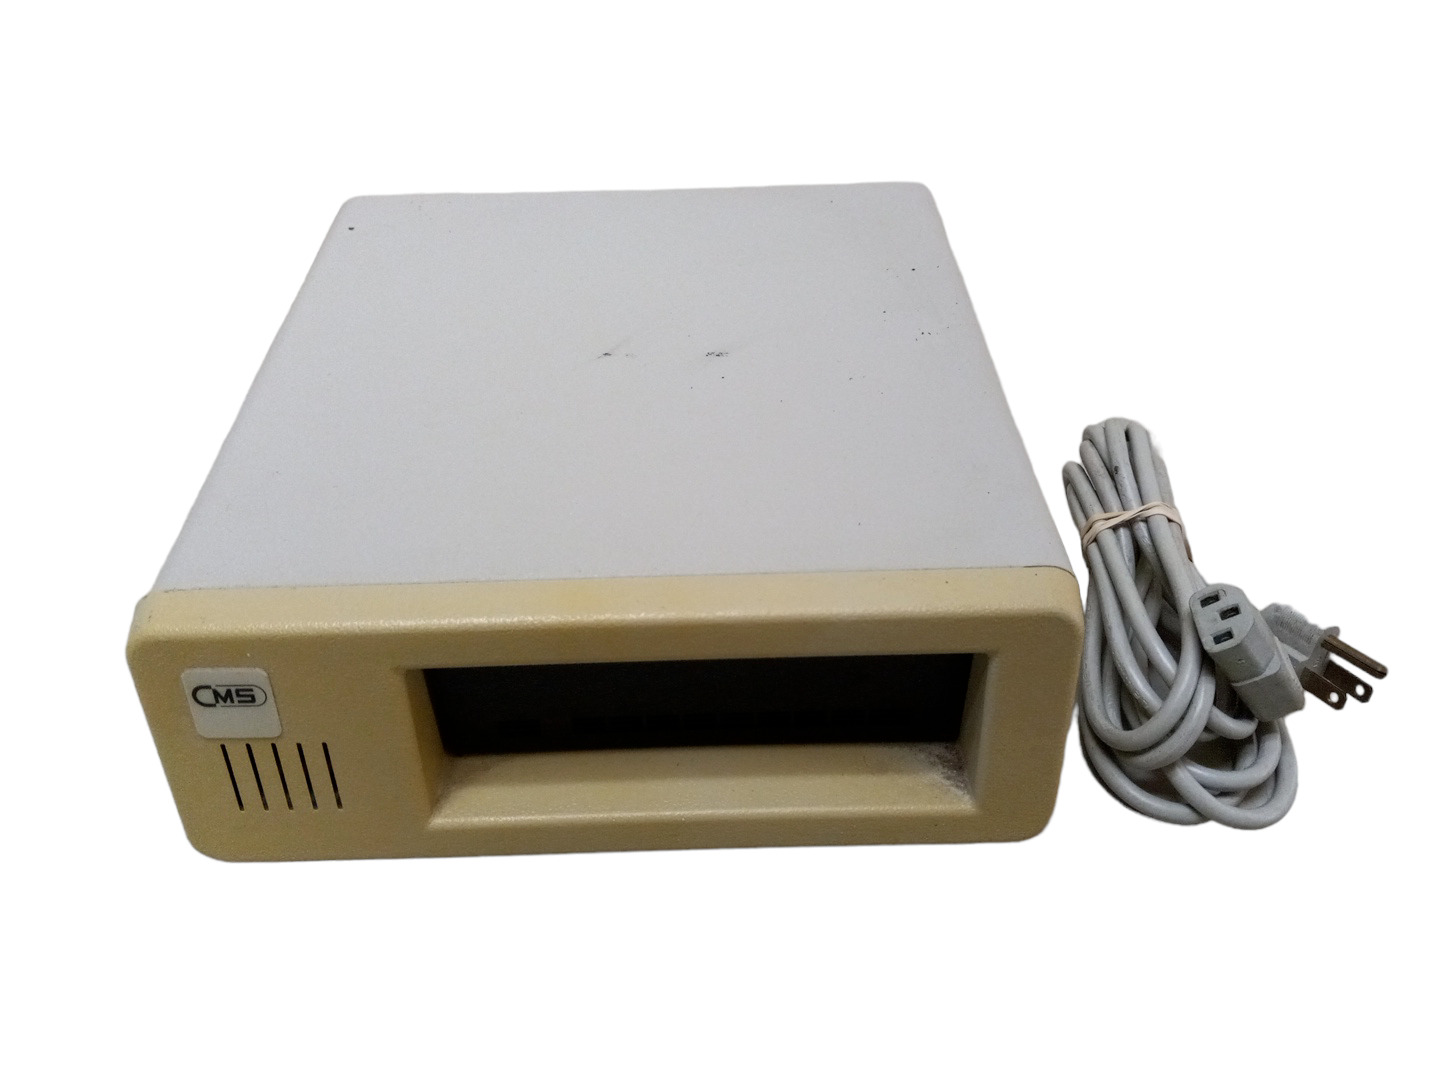 External SCSI Hard drive for Apple II MAC CMS Enhancements Model SD80